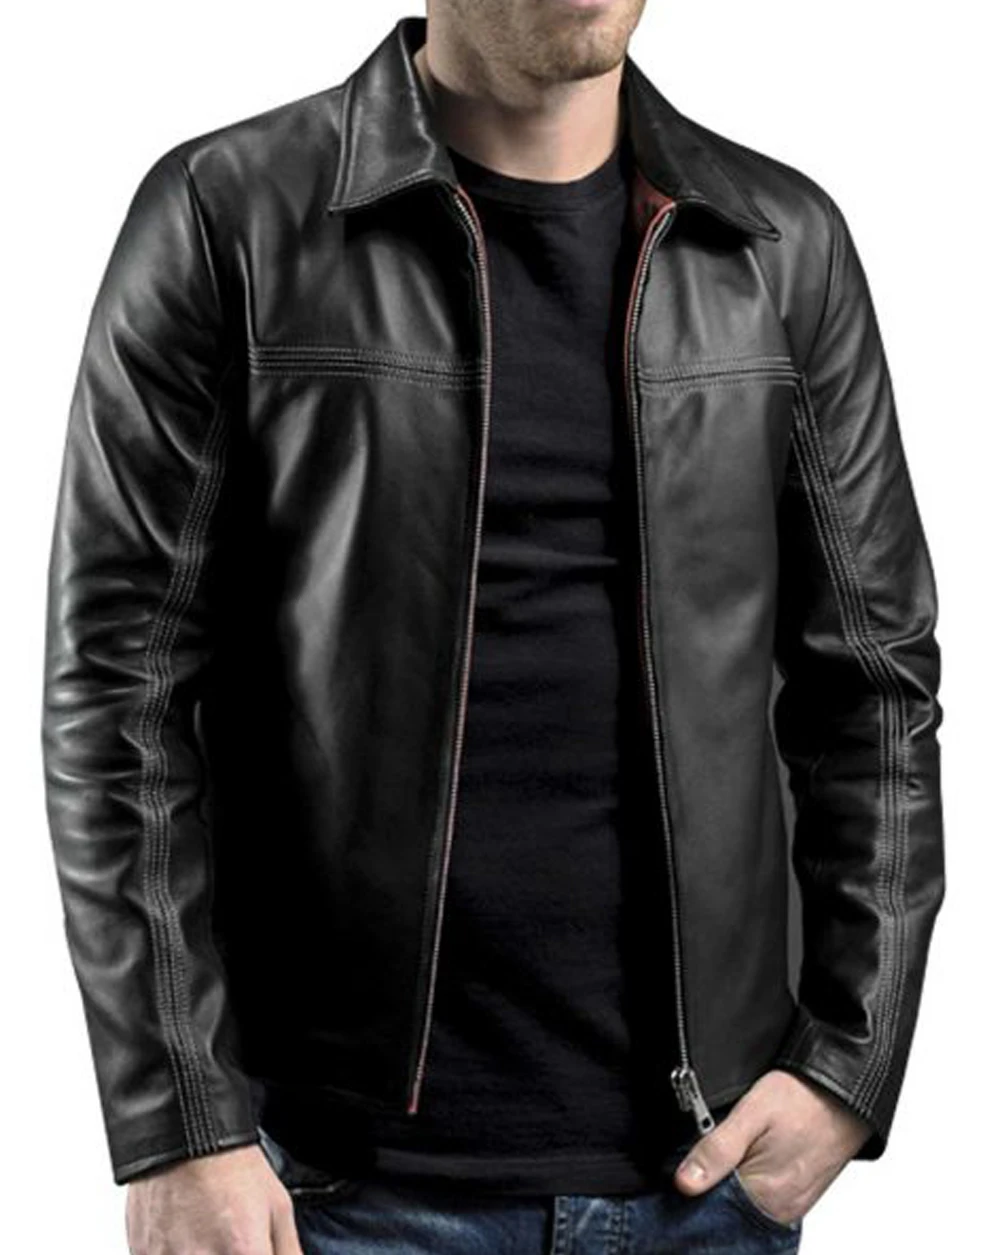 Buy Daniel Craig Leather Jacket